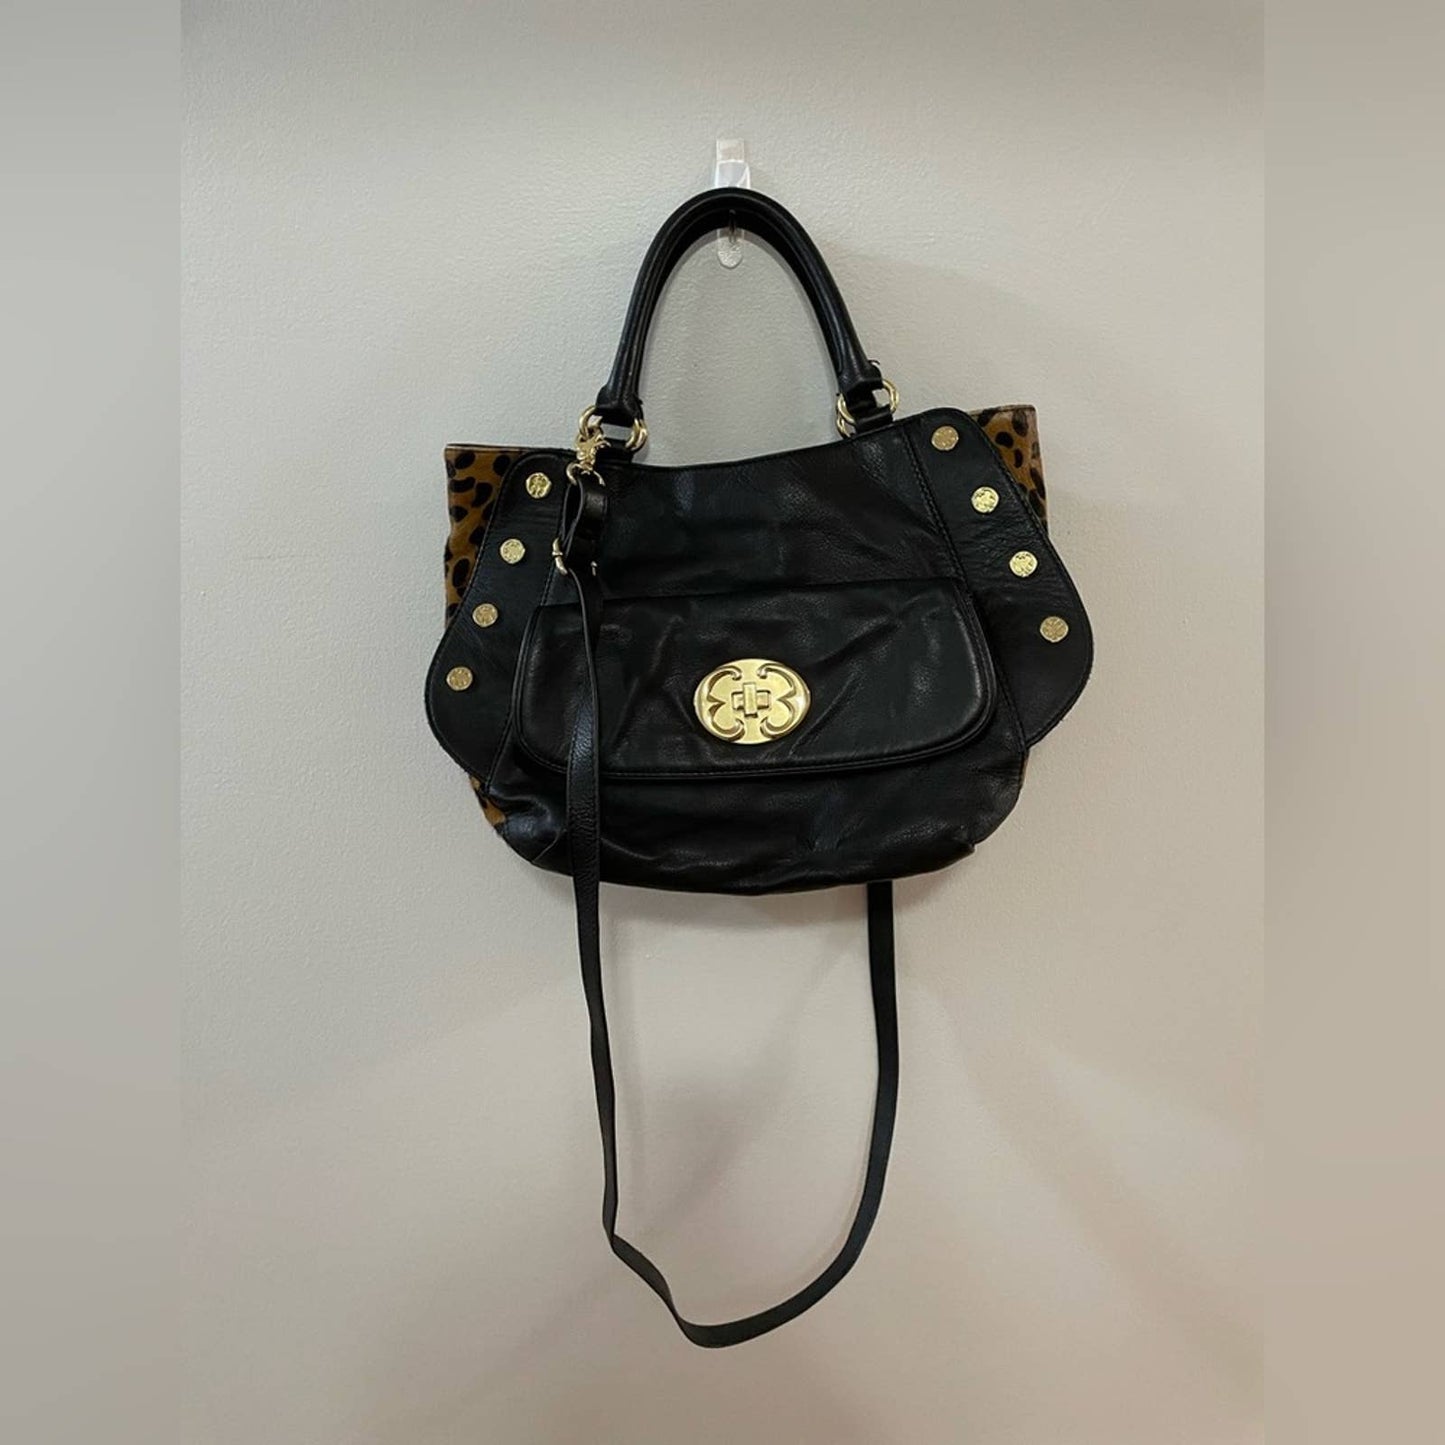 Emma Fox Black Leather Handbag